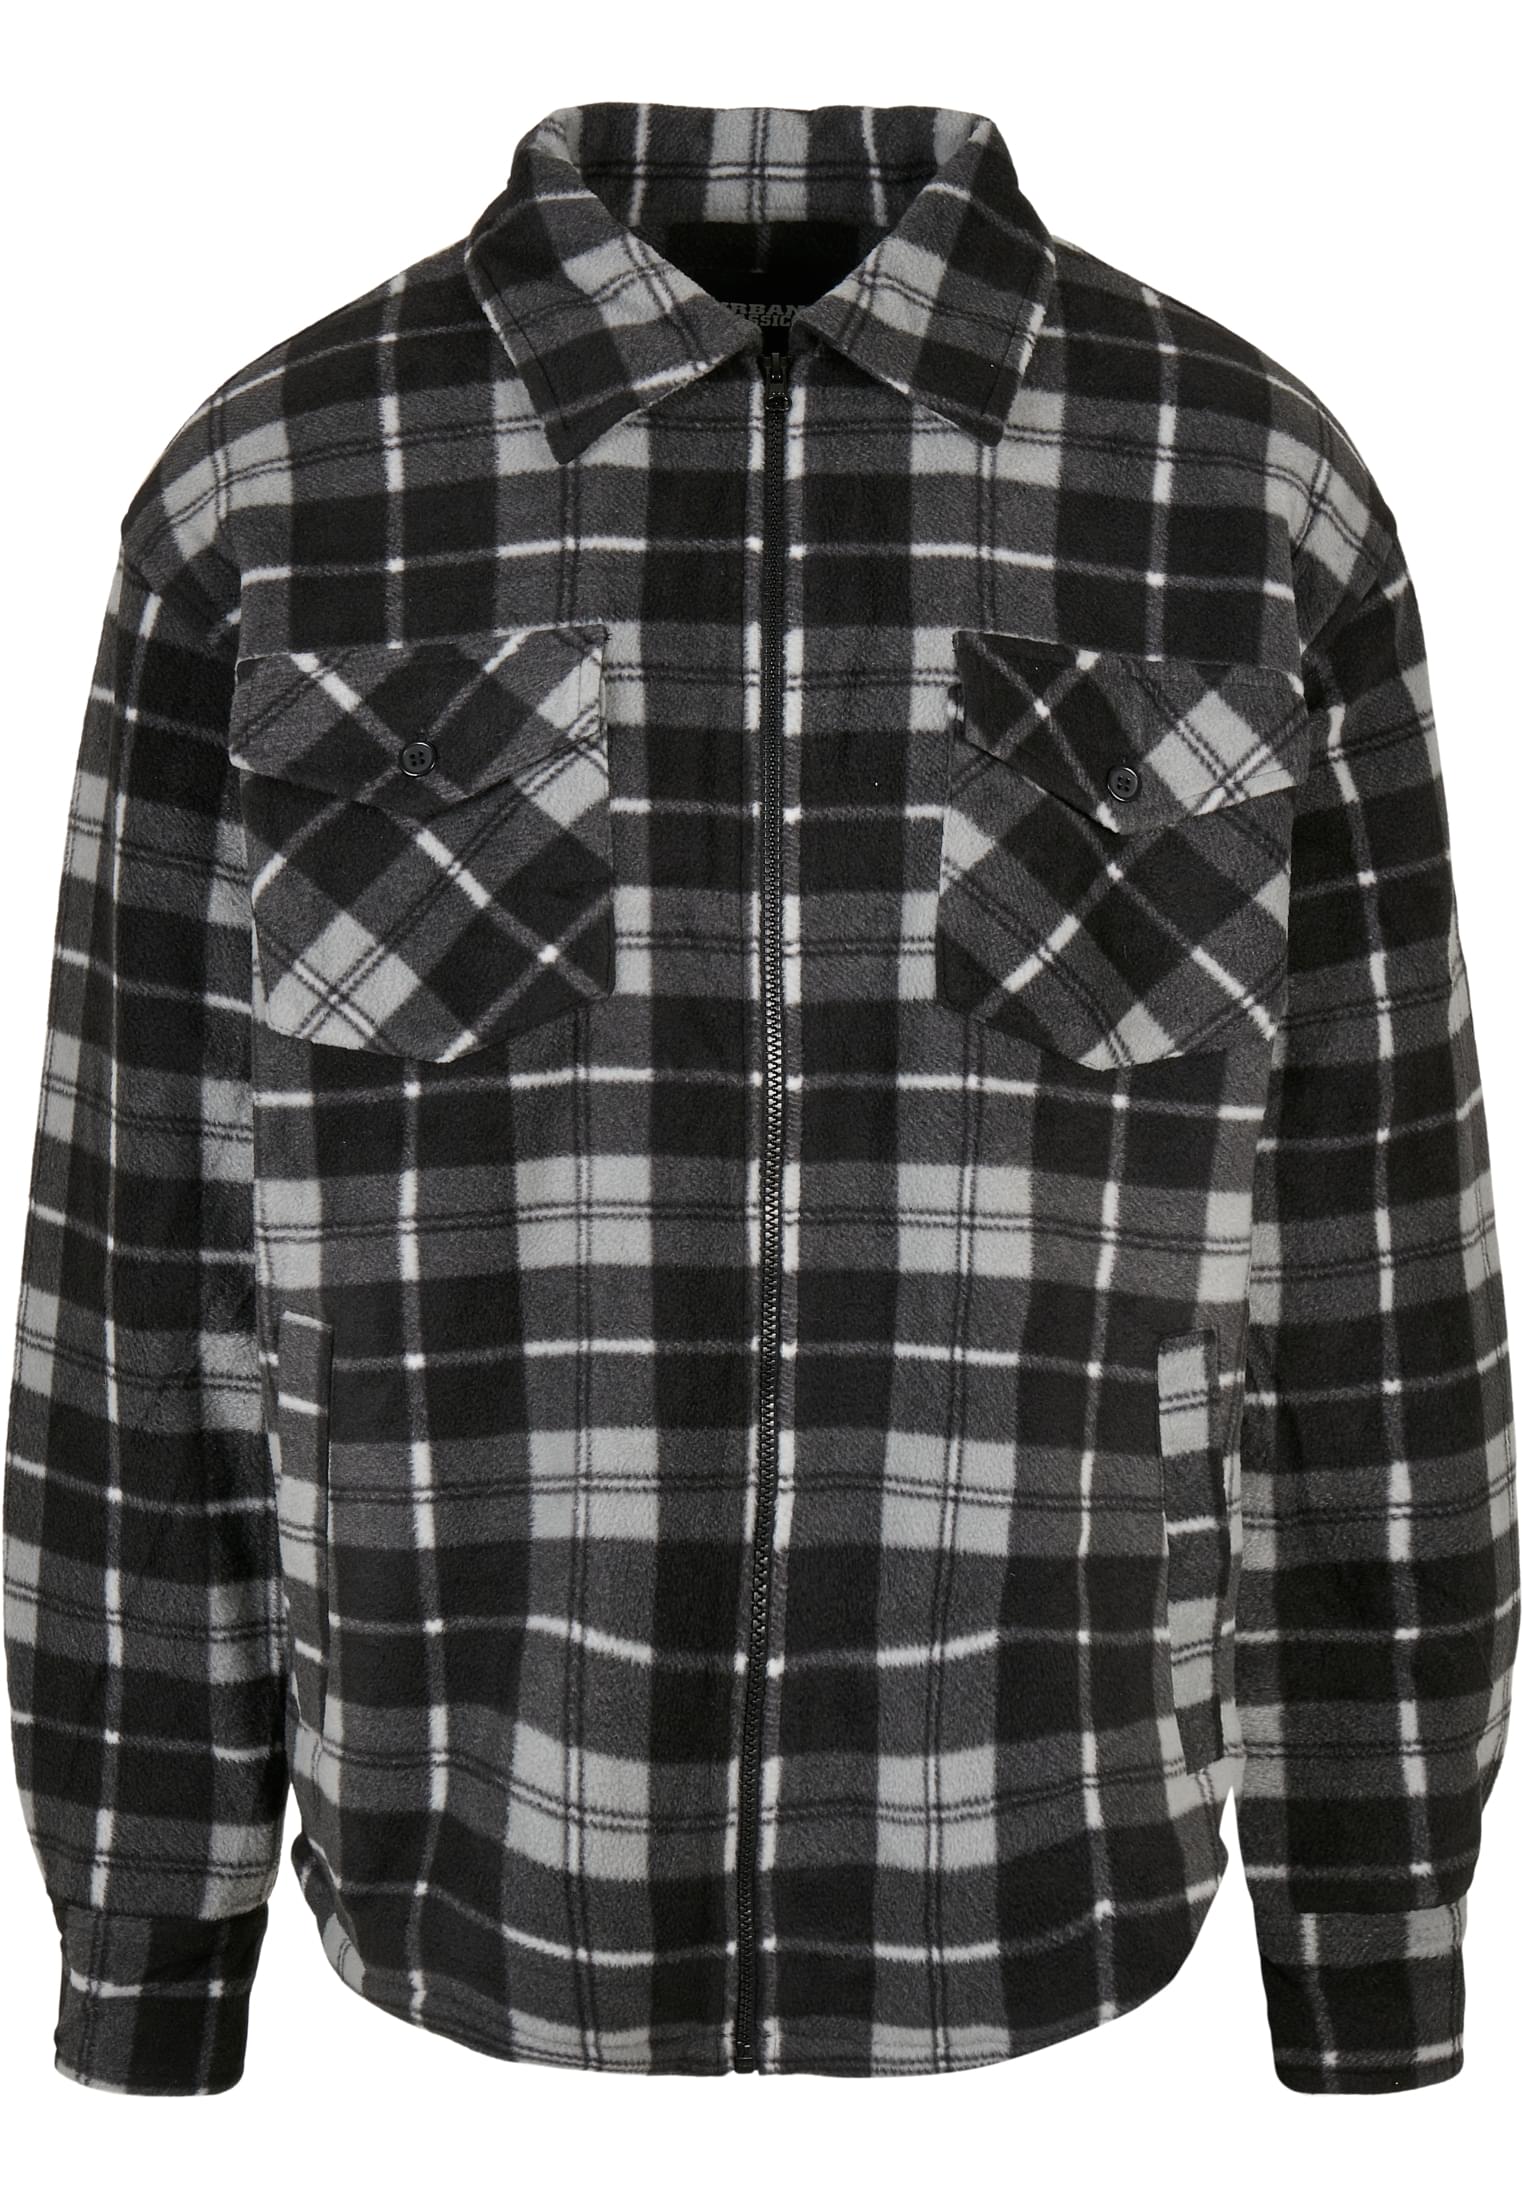 Hemden Plaid Teddy Lined Shirt Jacket in Farbe black/white